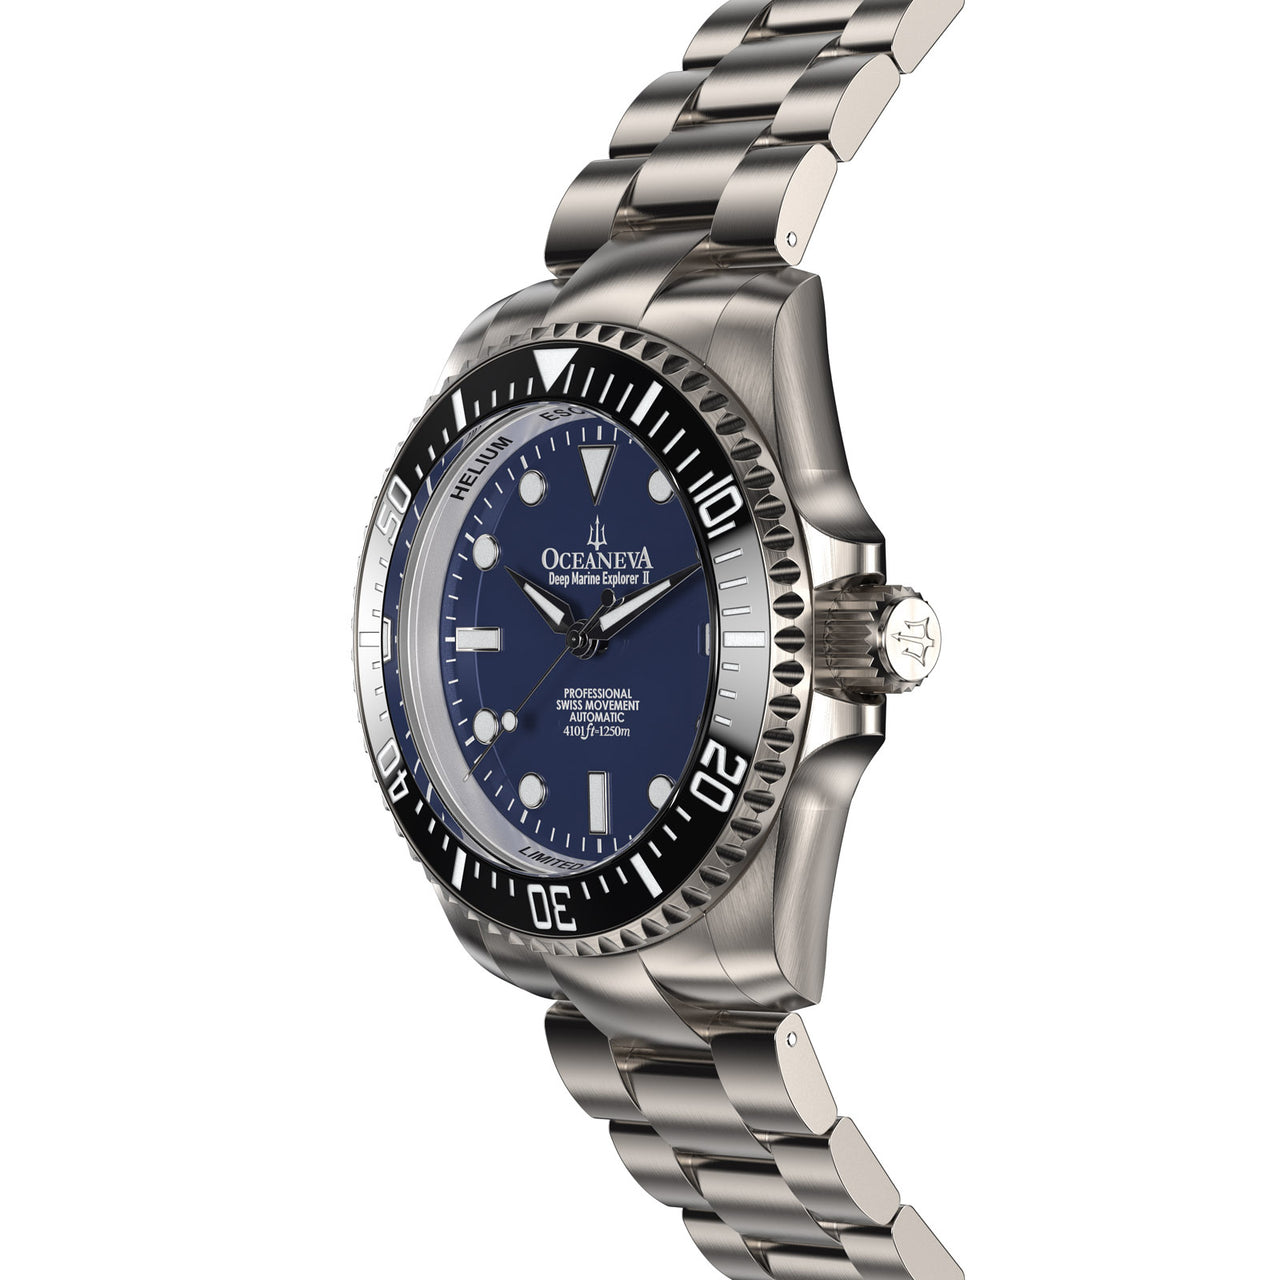 Oceaneva™ Men's Deep Marine Explorer II 1250M Titanium Watch Navy Blue